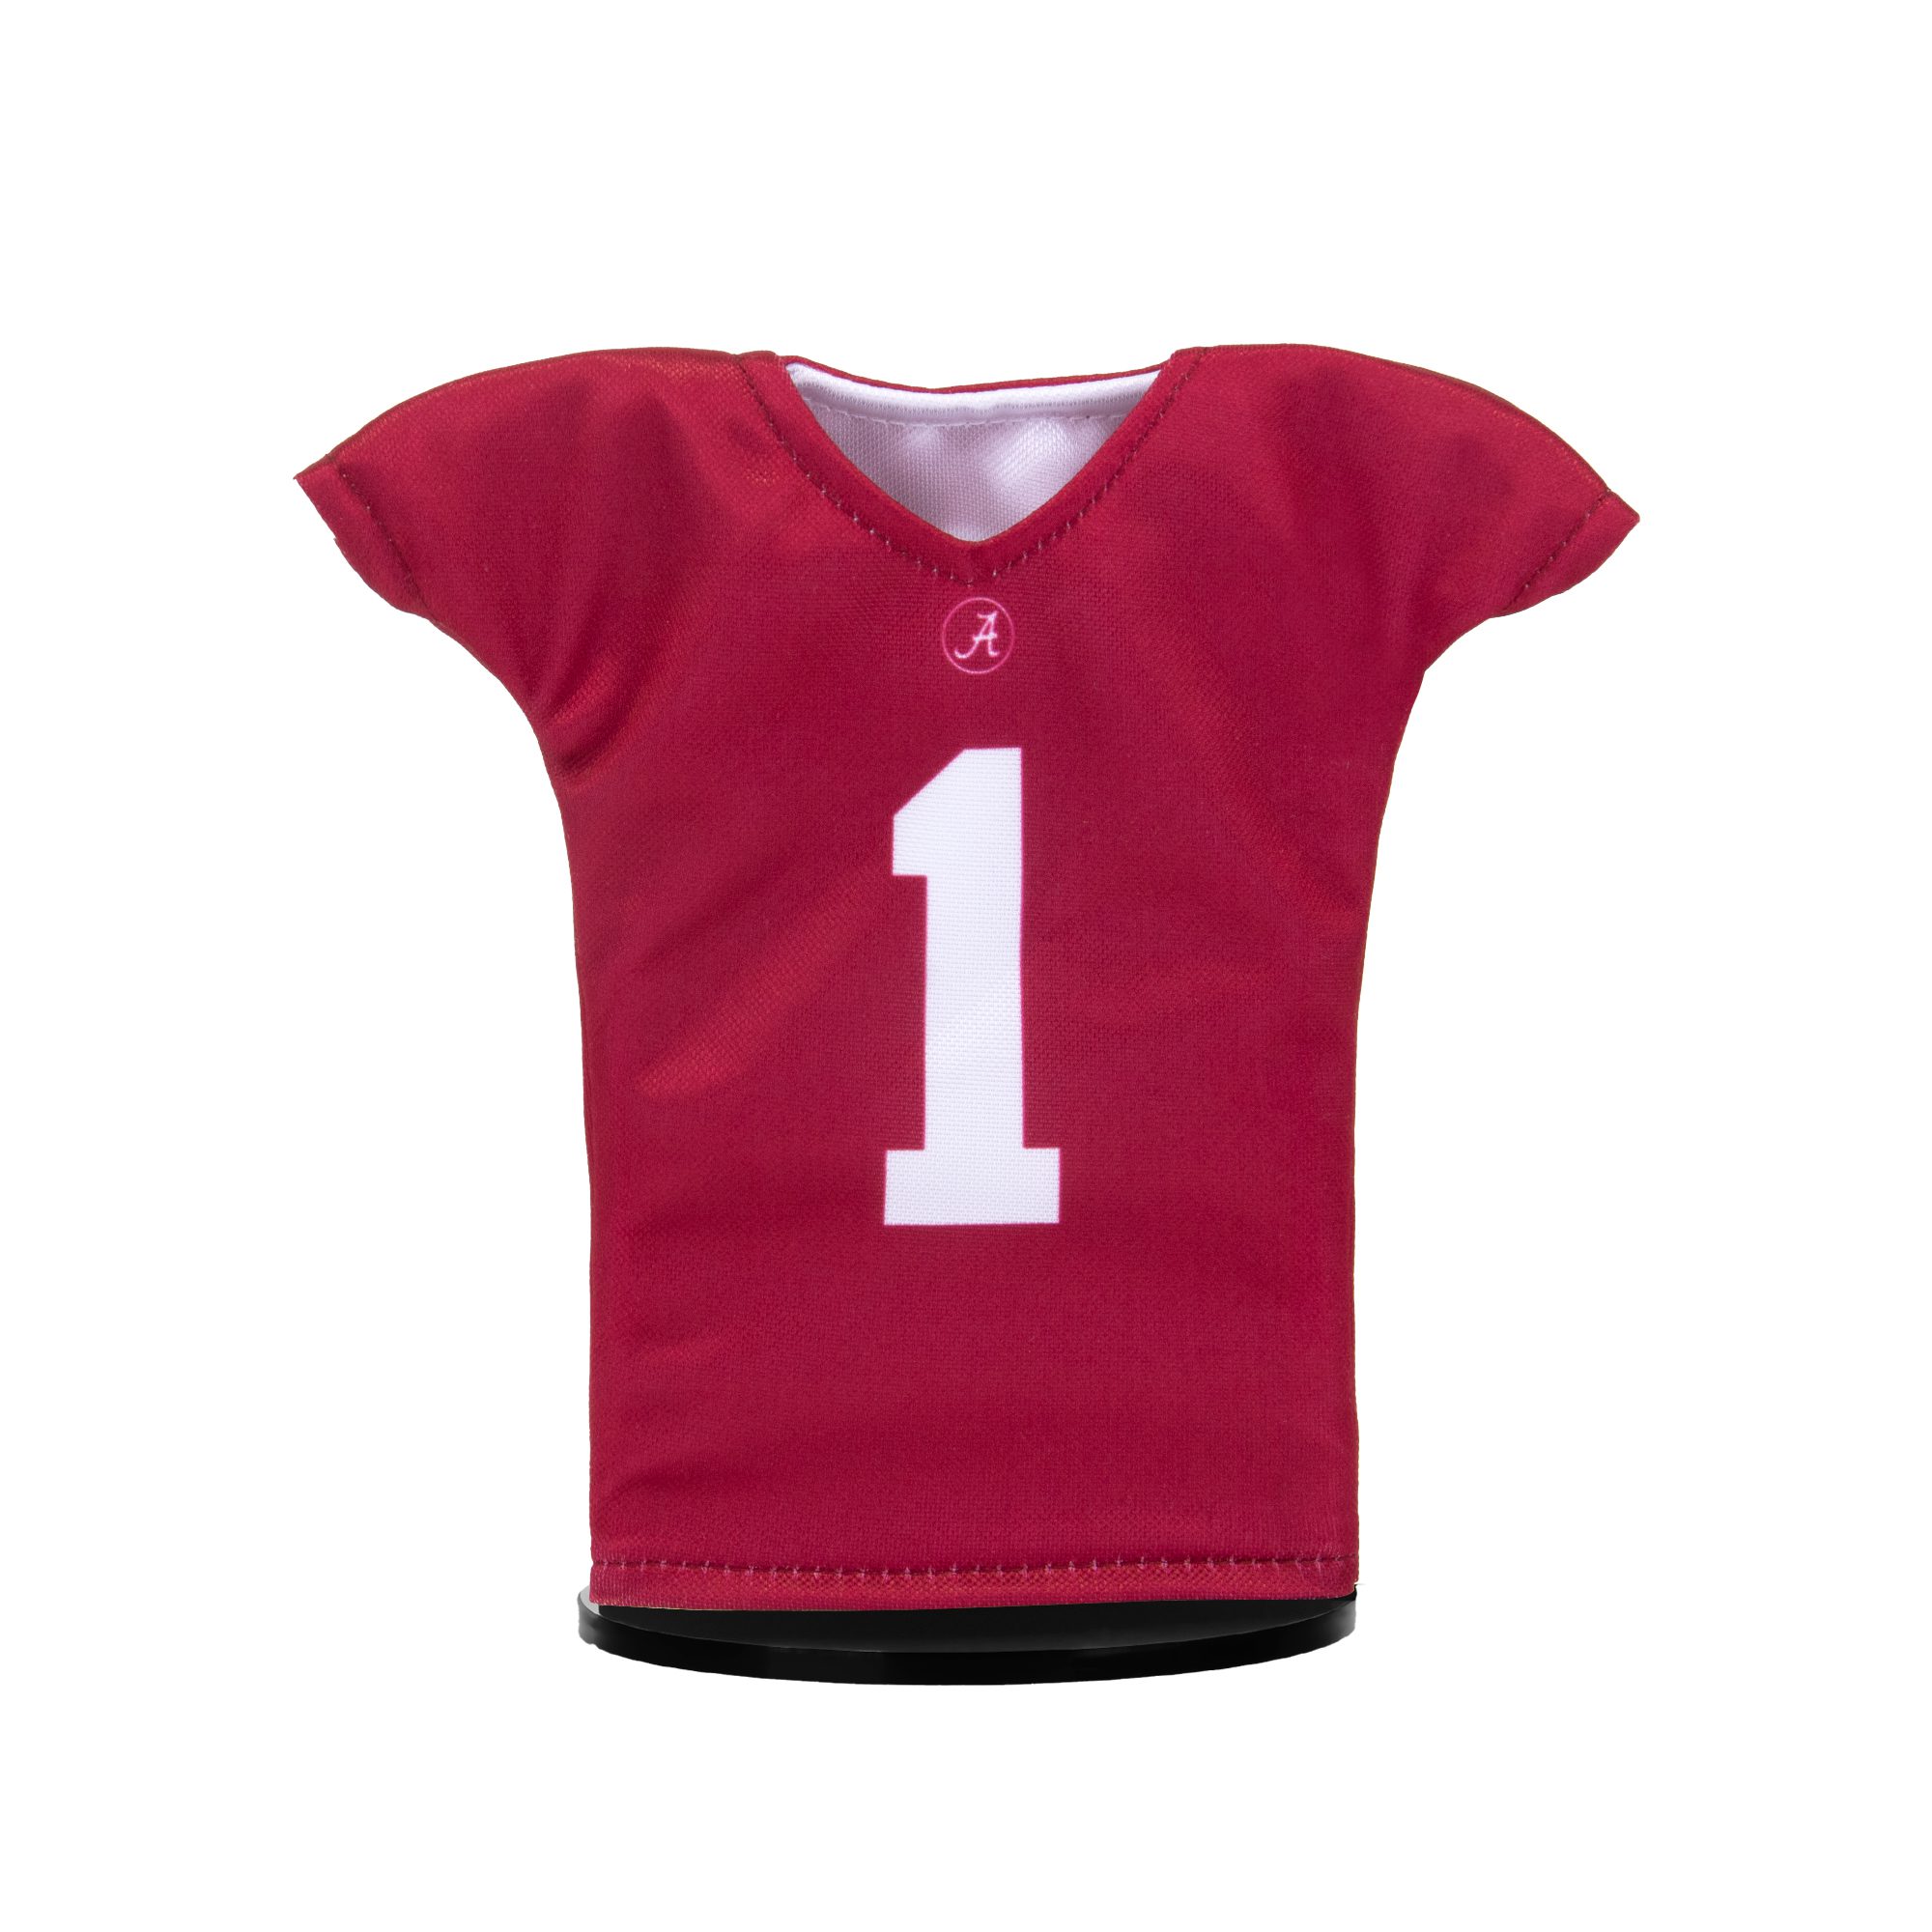 Alabama Football #1 Miniature Jersey Red